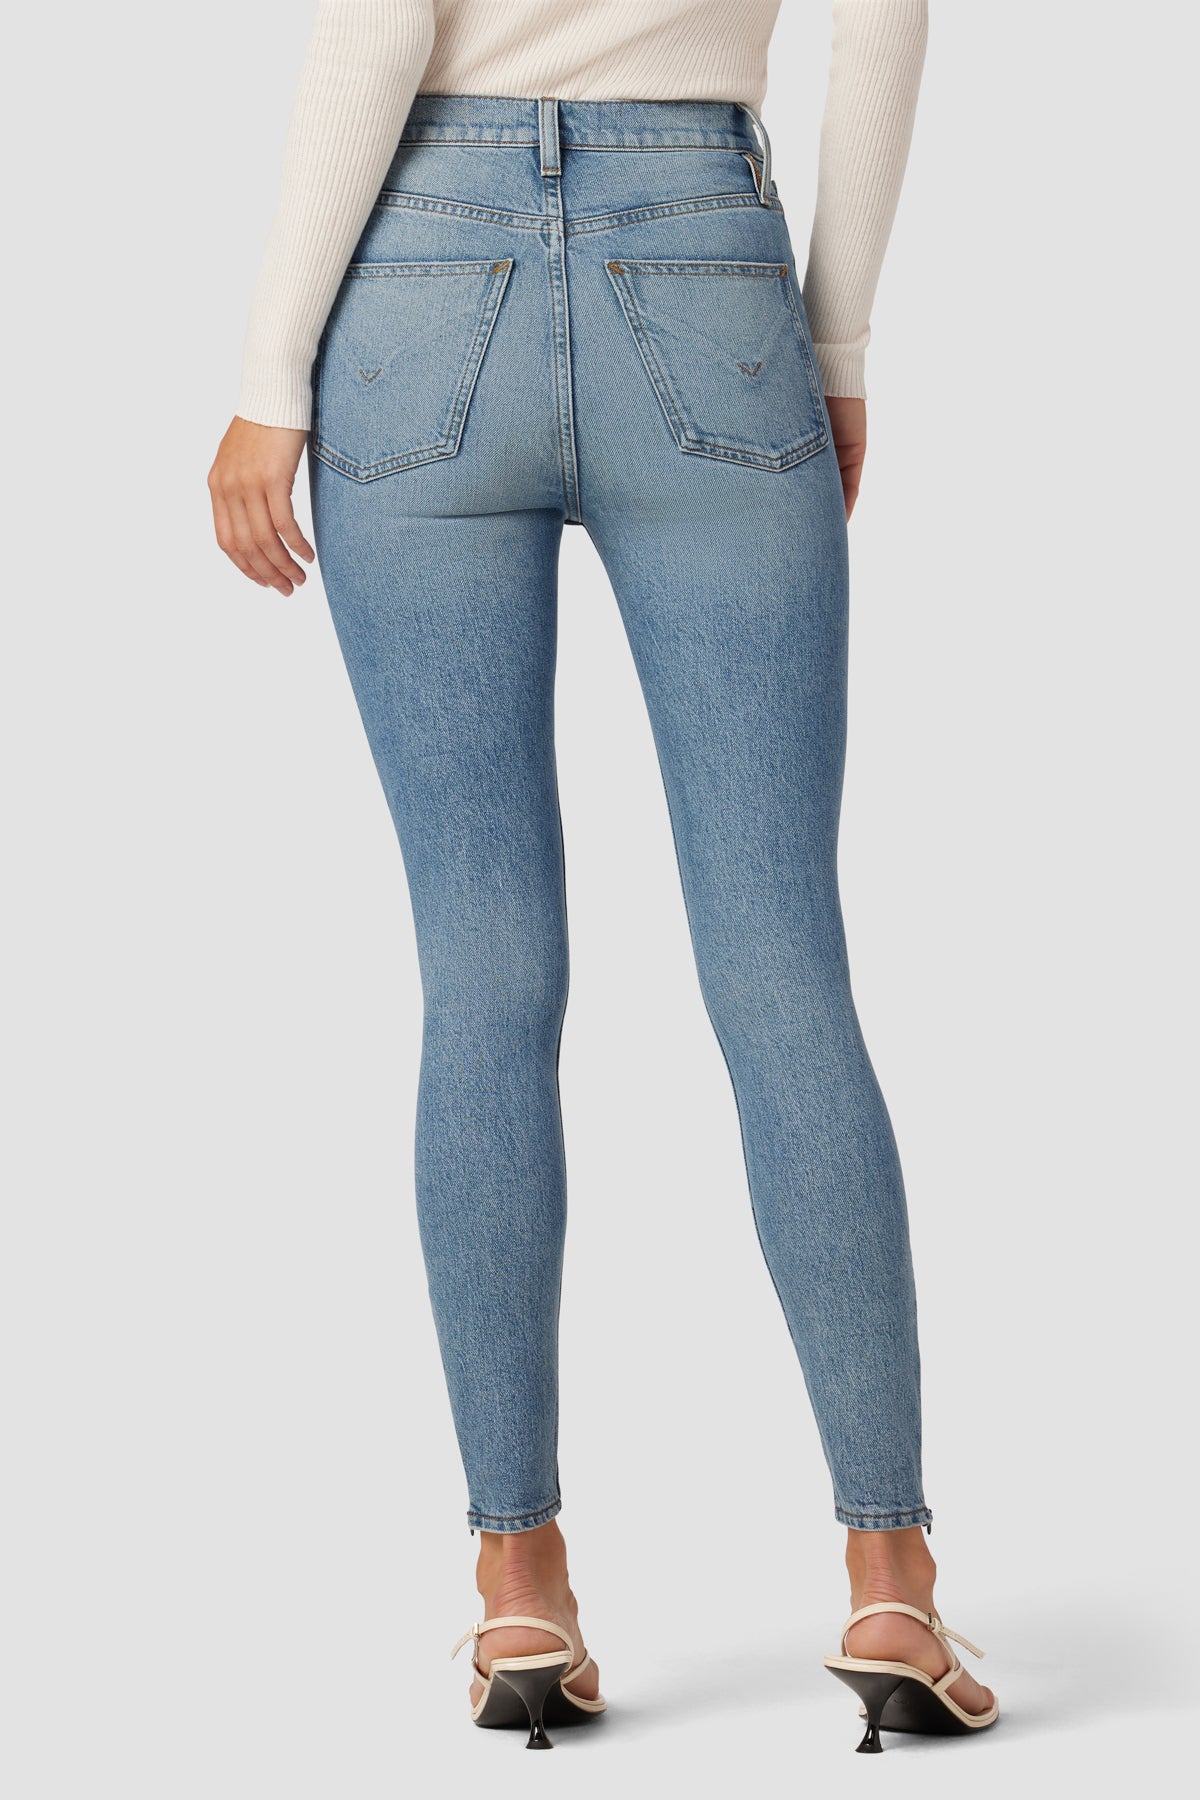 HUDSON Jeans Women's Bullocks High Rise Lace Up Super